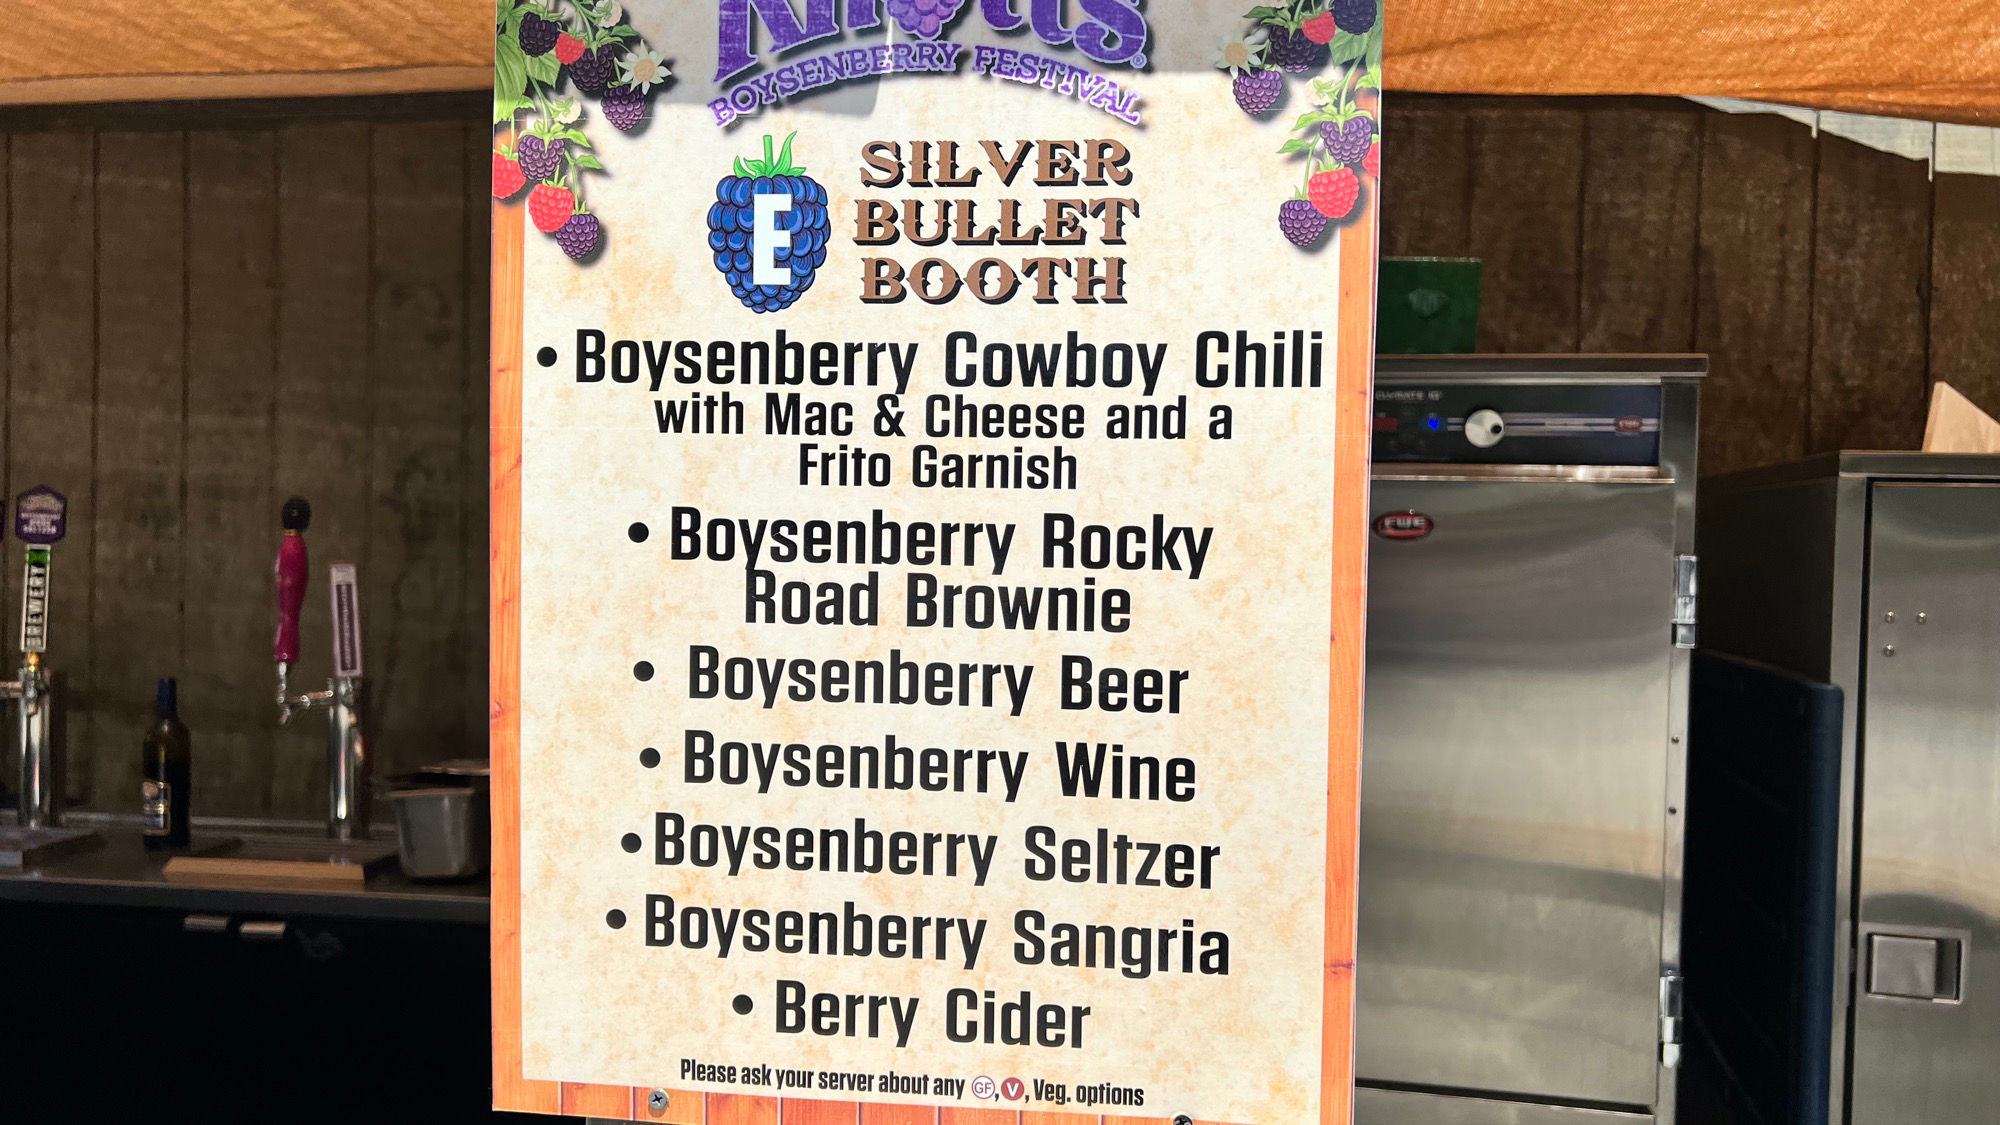 Boysenberry Festival Silver Bullet Booth